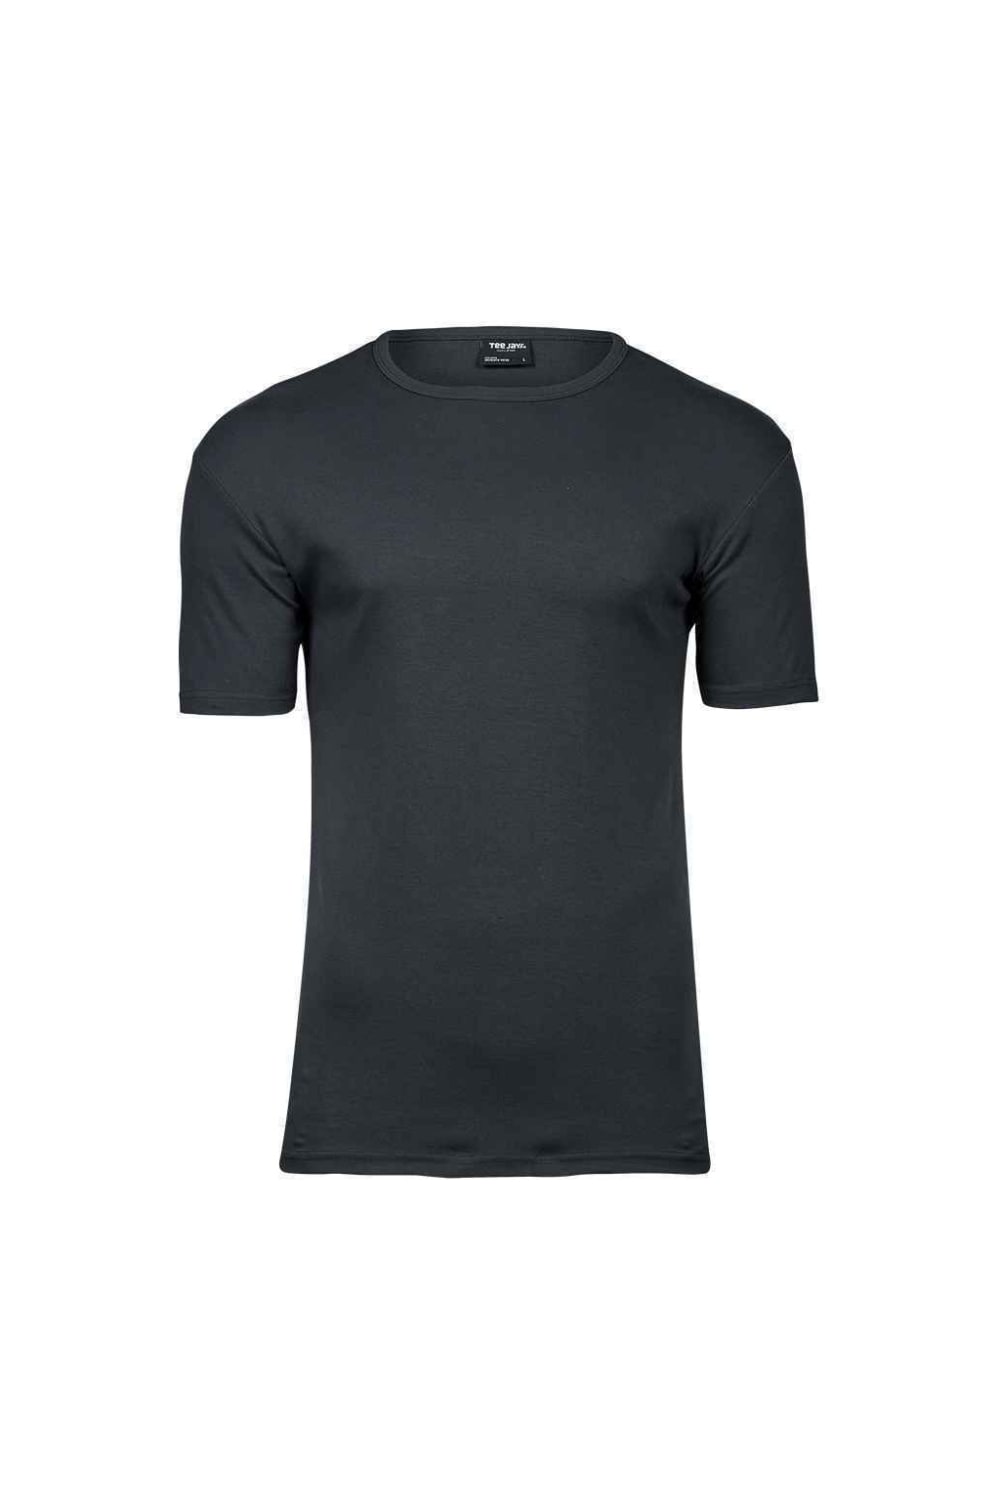 Tee Jays Mens Interlock T-Shirt (Dark Grey)